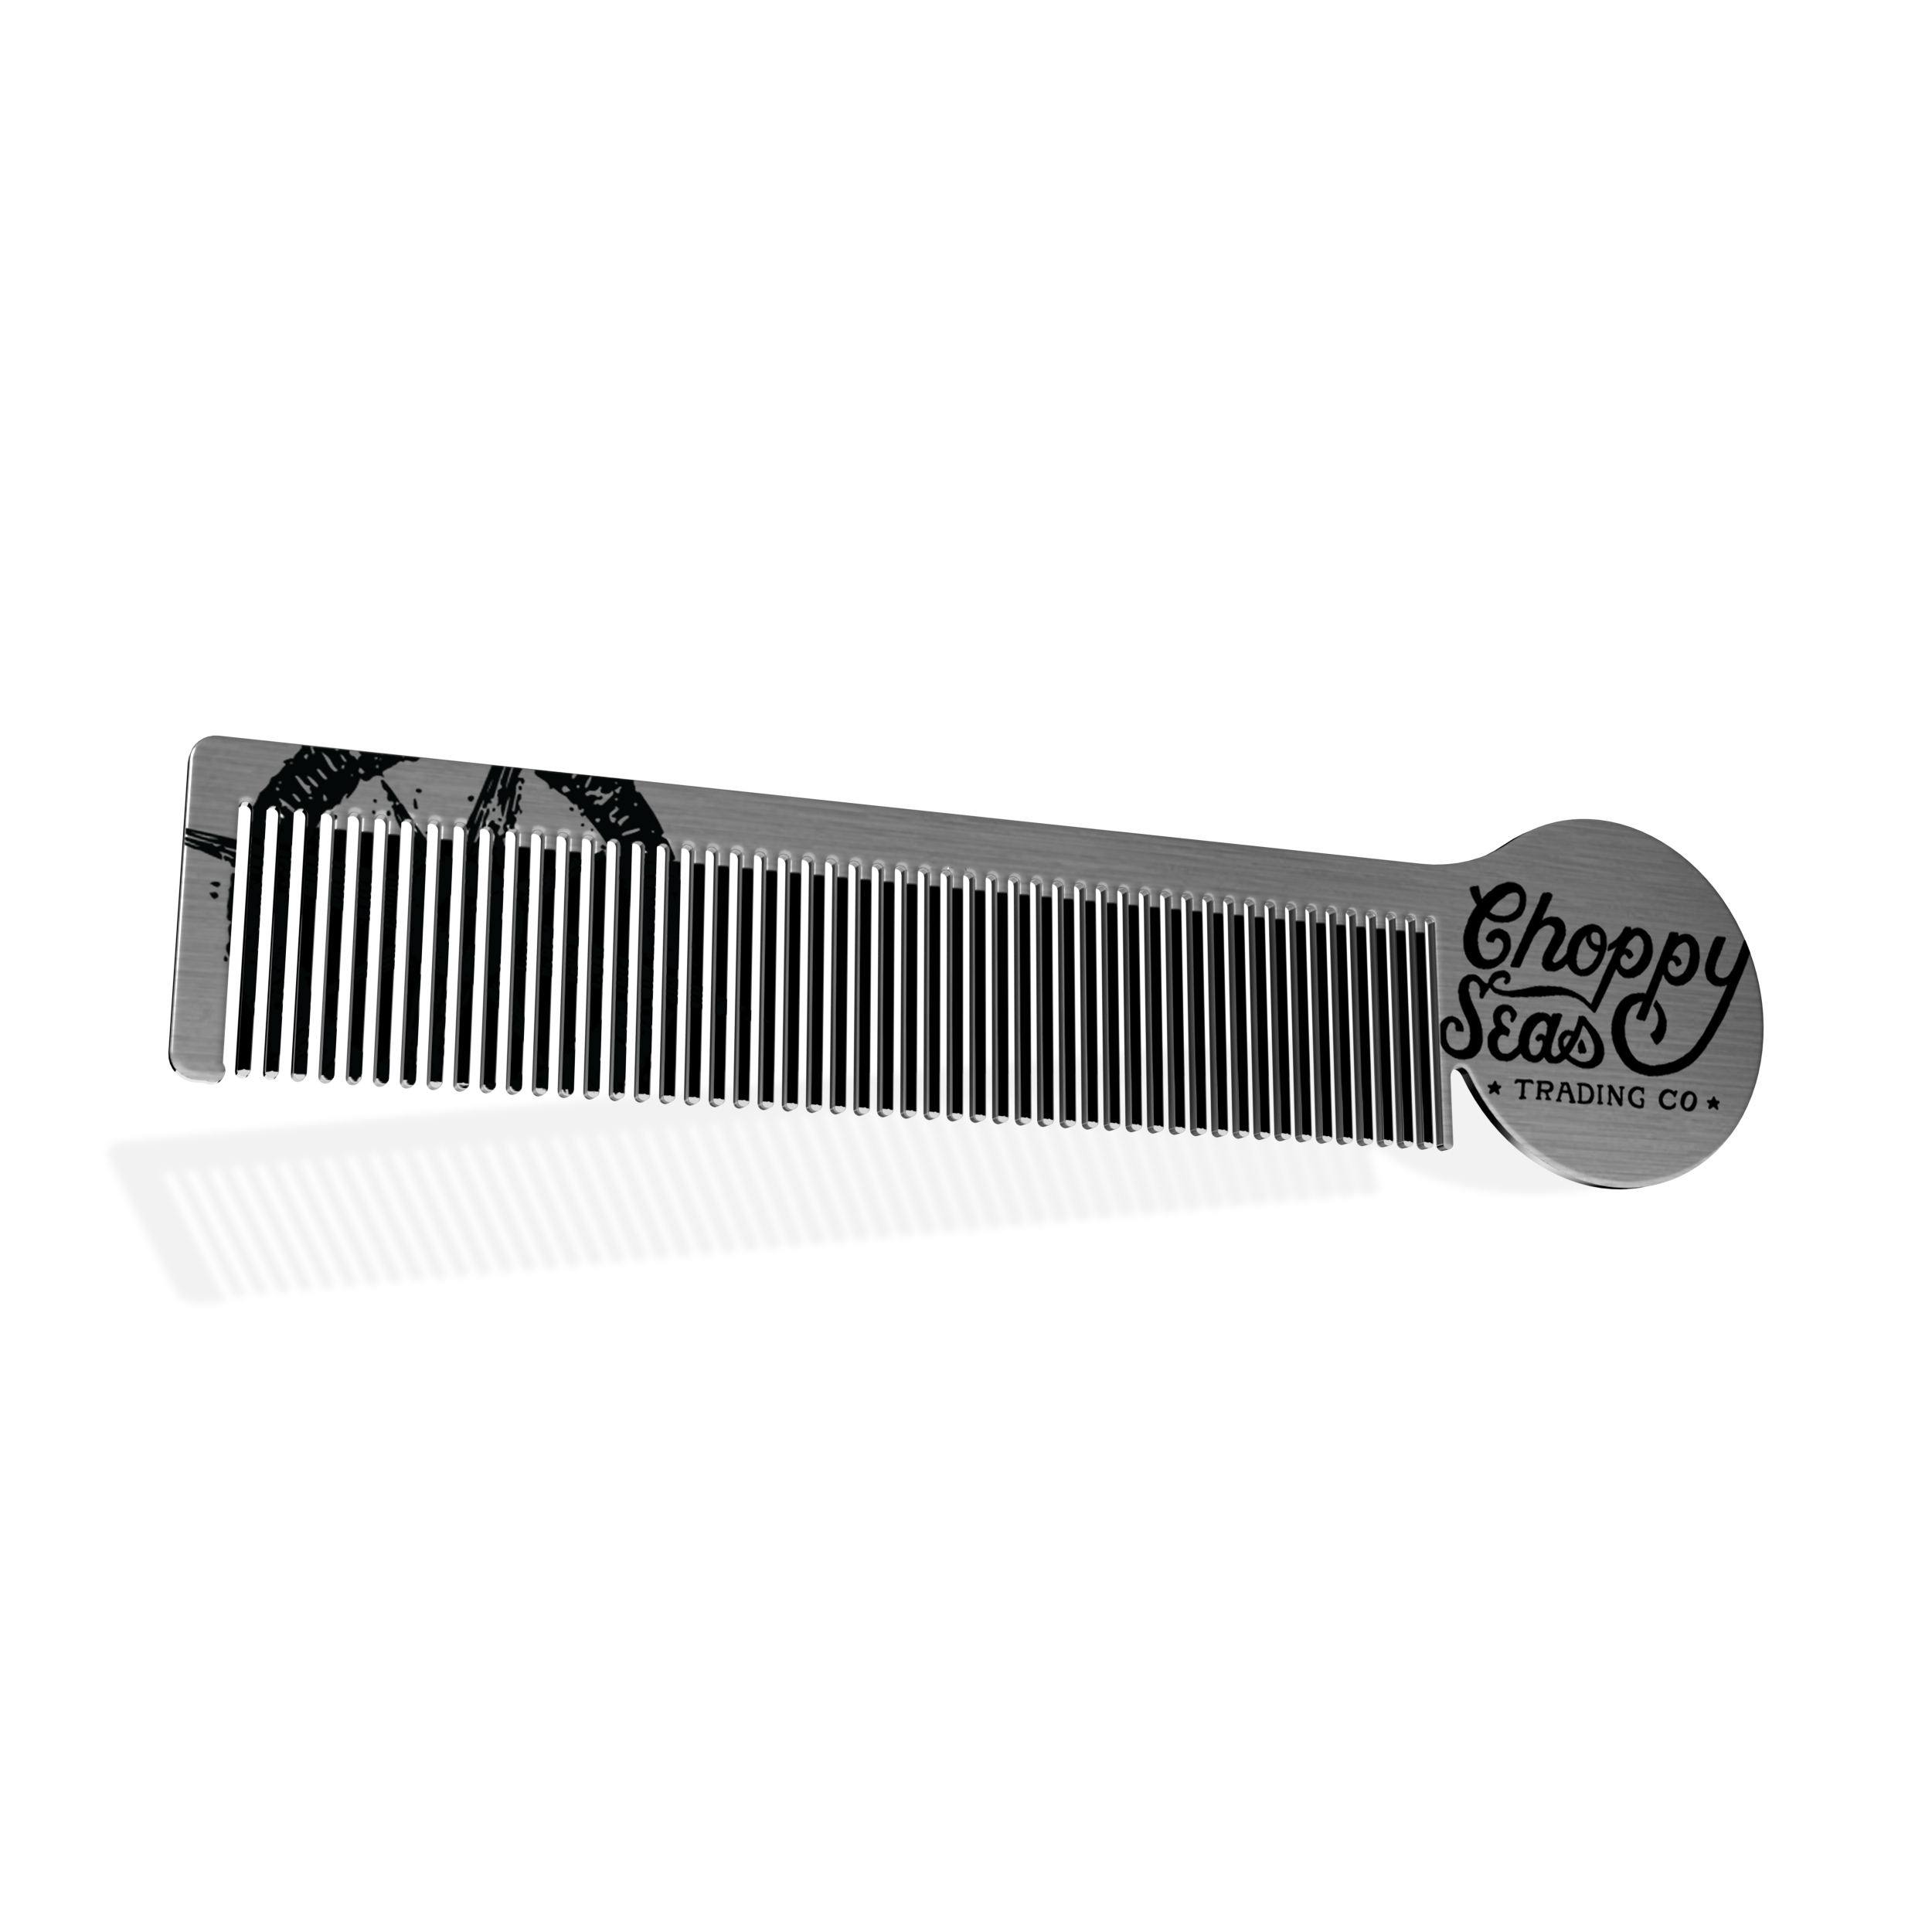 Choppy Seas Stache Mate - Stainless Steel Mustache Comb